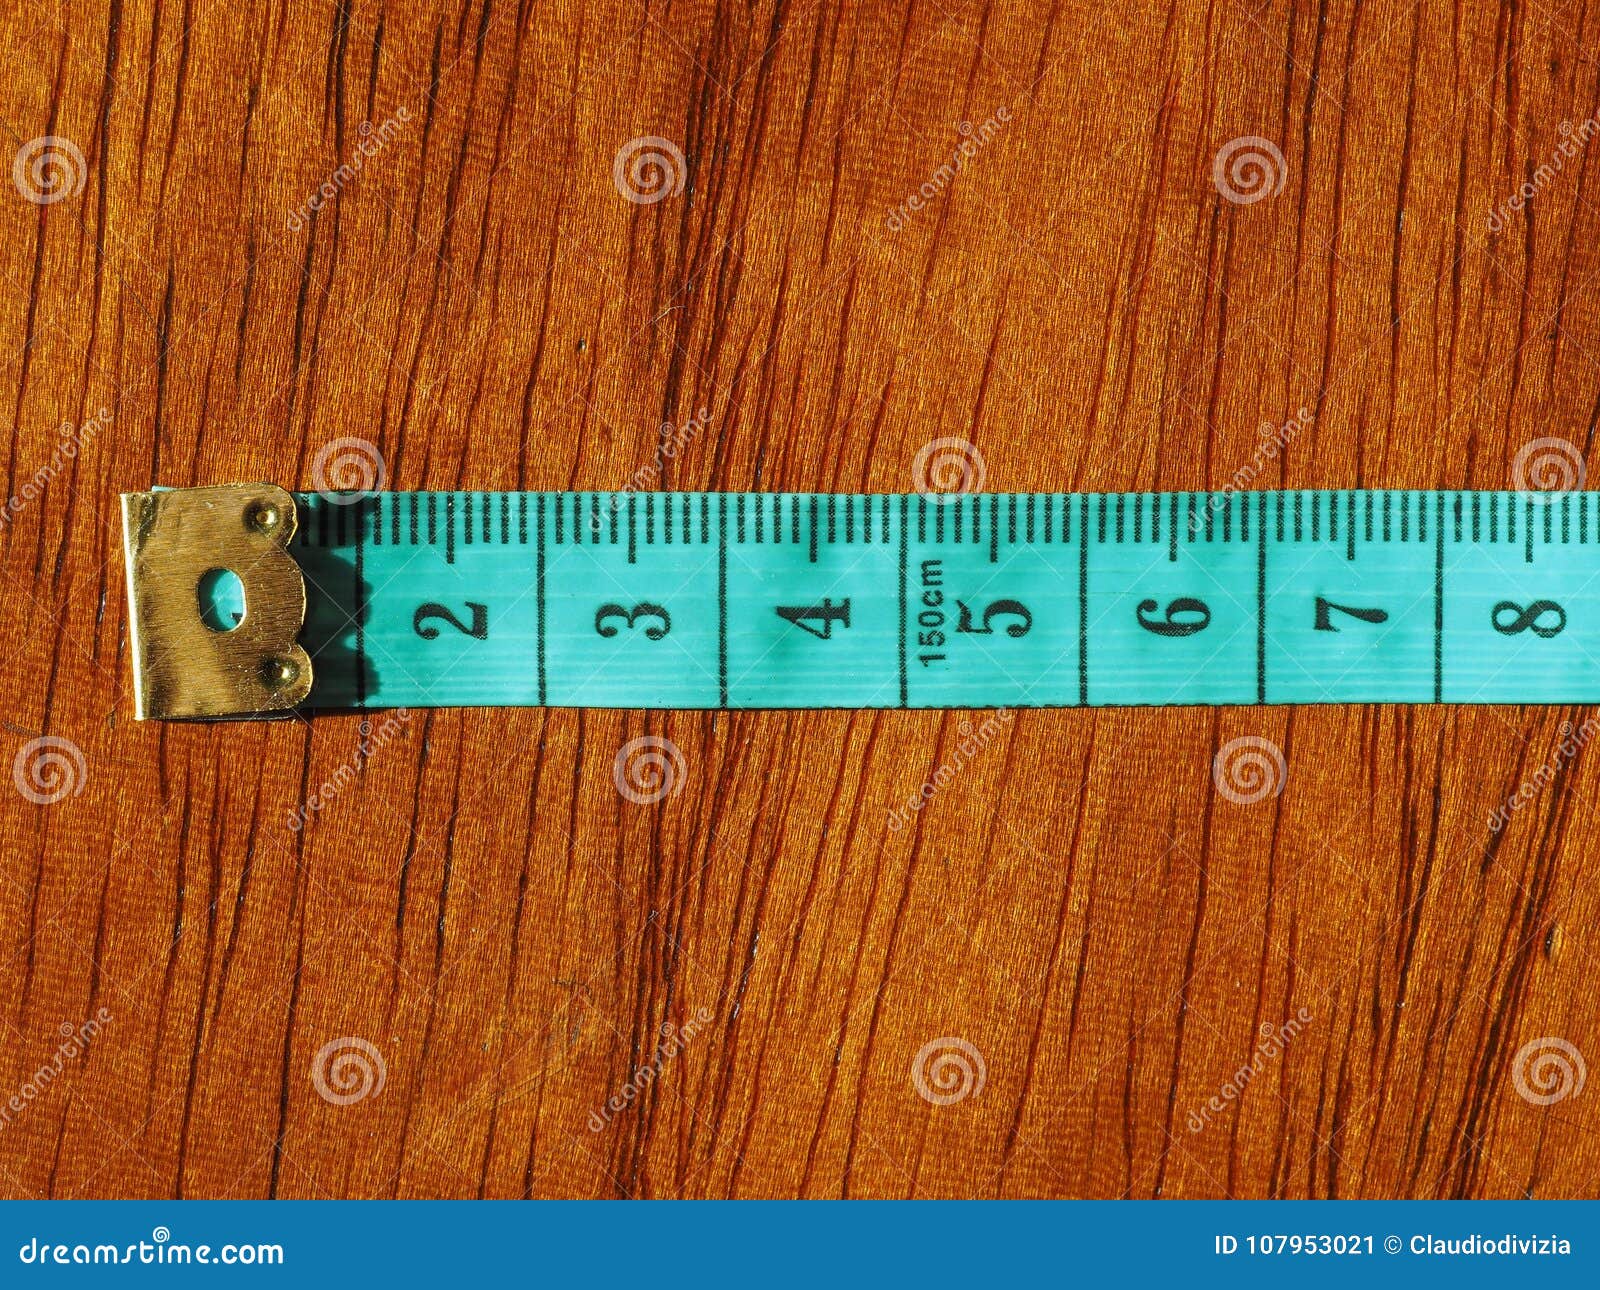 Tailor meter ruler stock image. Image of wood, mter - 107953021